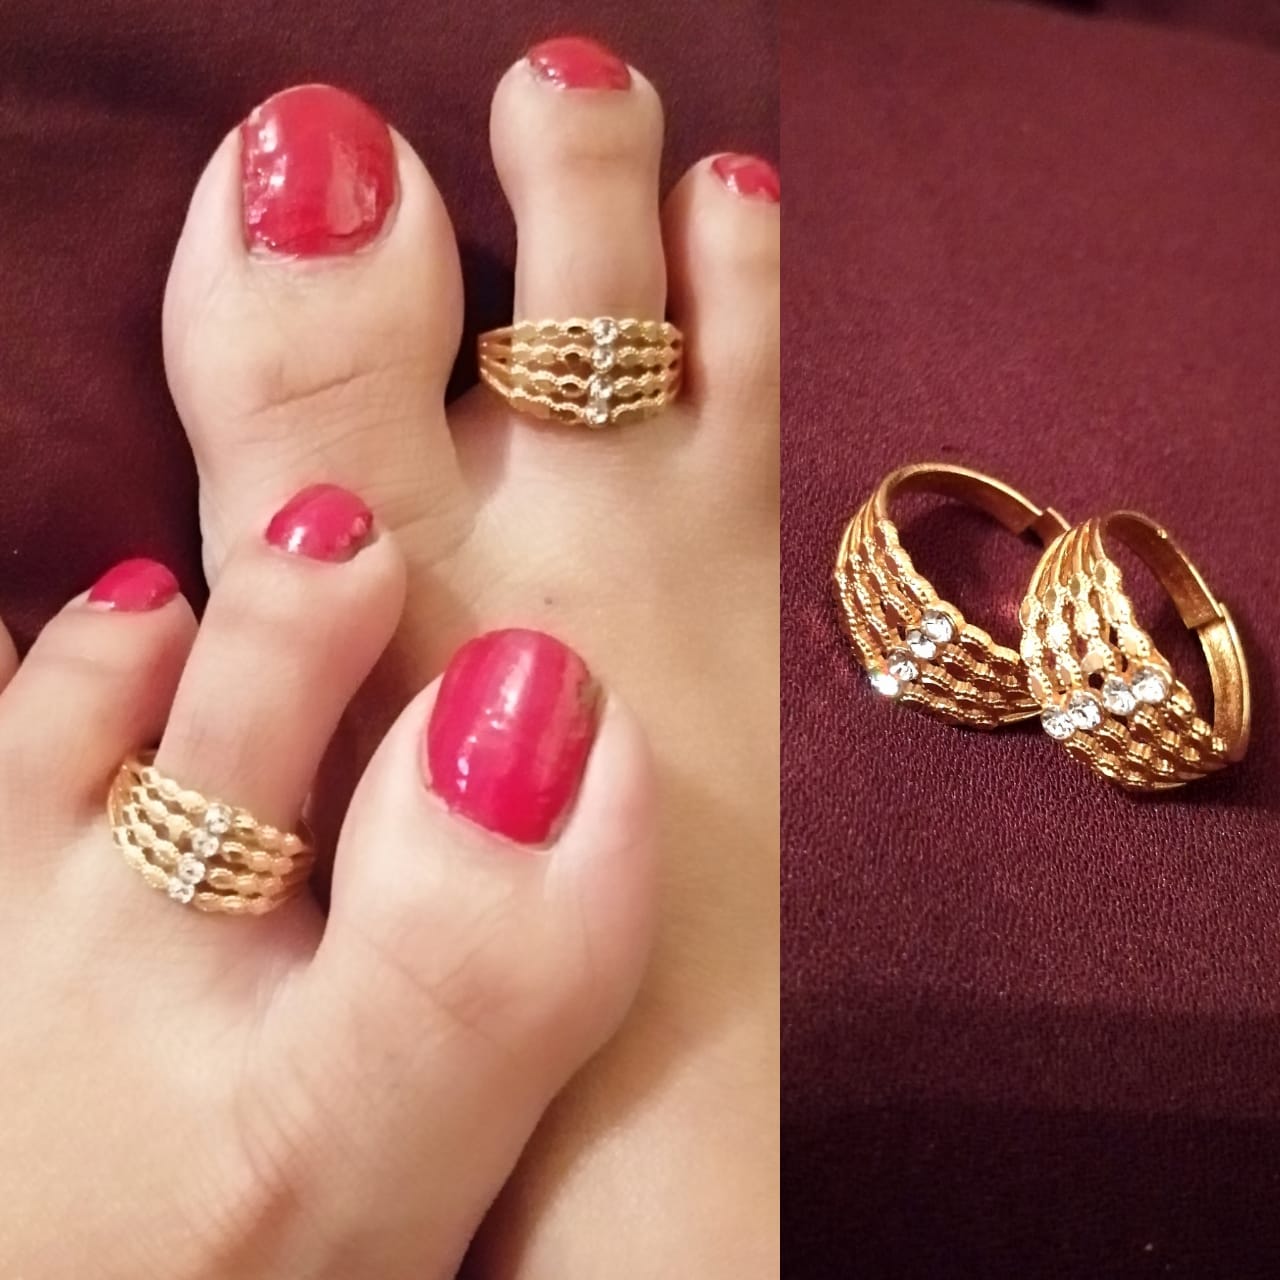 Super slim dailywear gold toe rings - Disha - 4249374